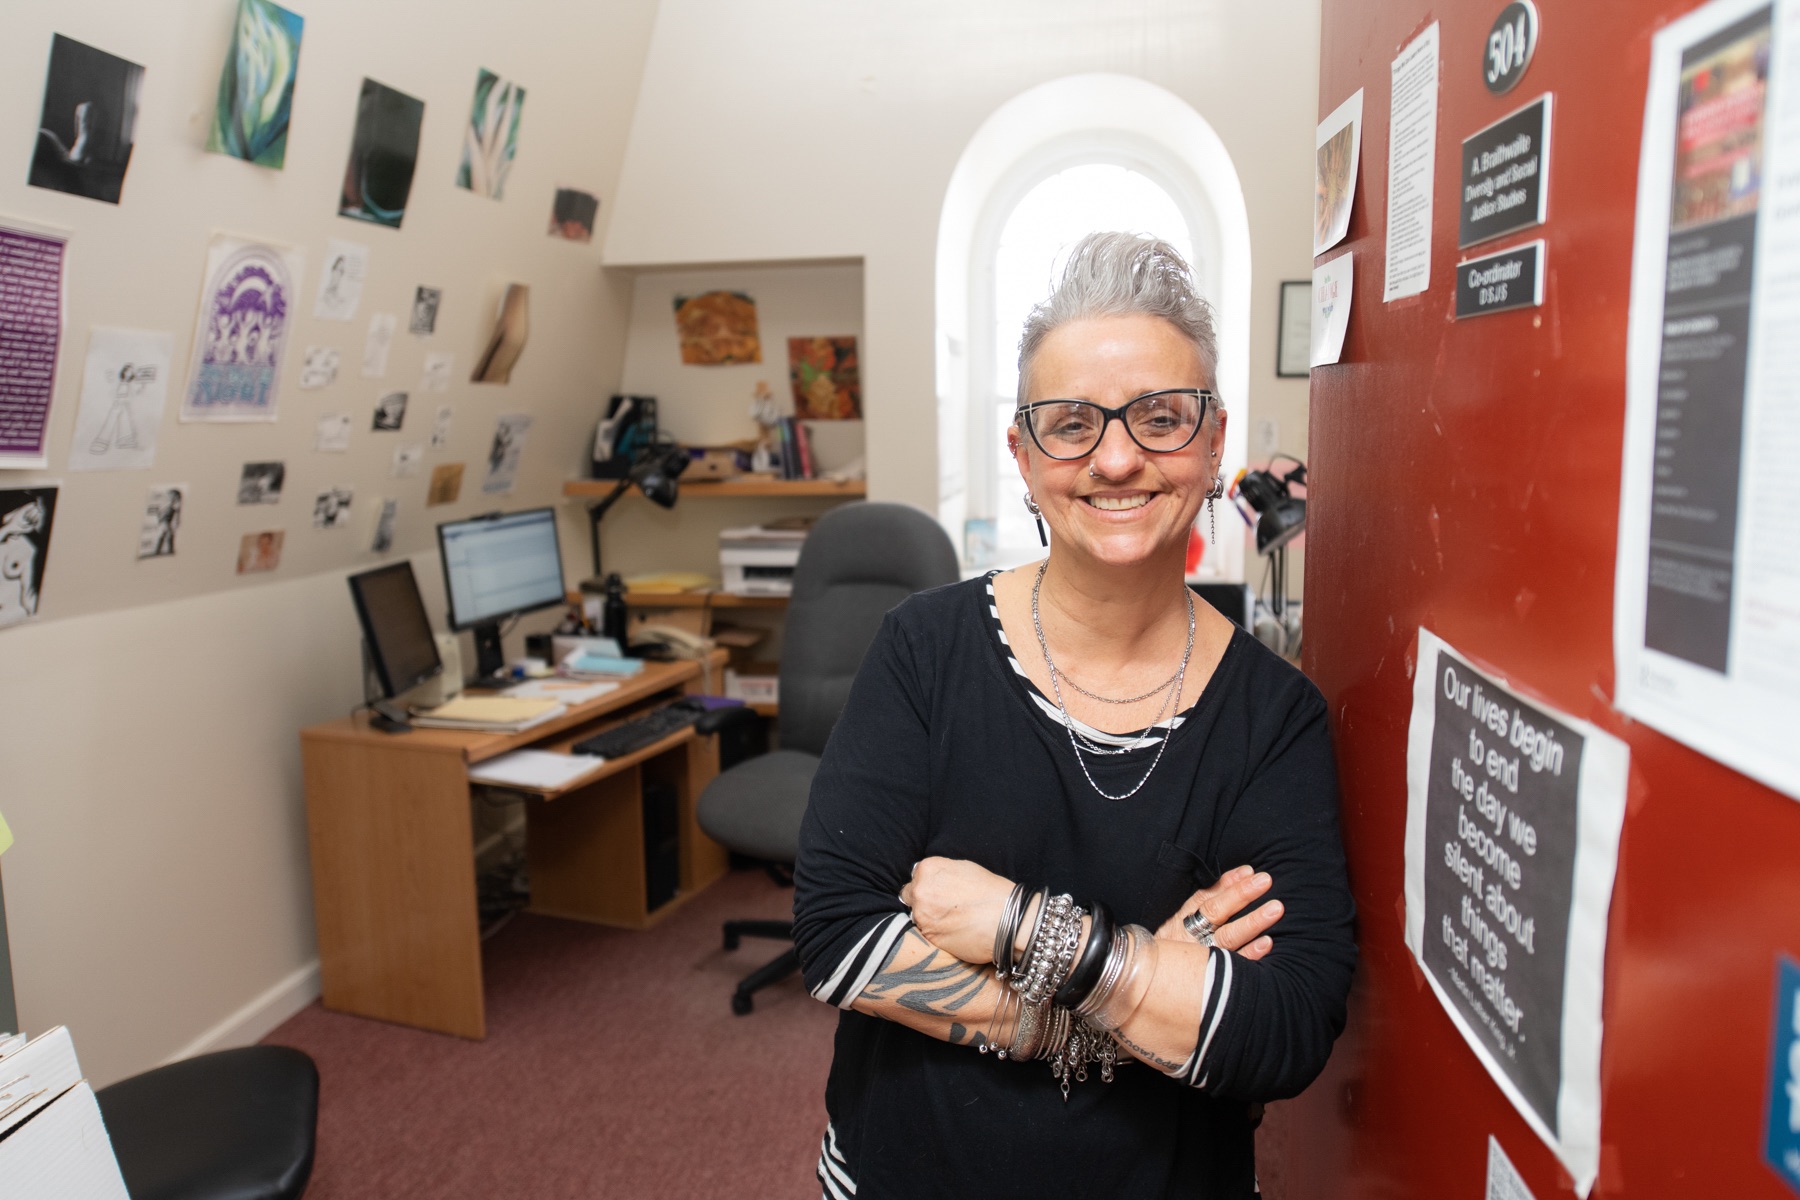 upei professor ann braithwaite standing in doorway with her office in the background